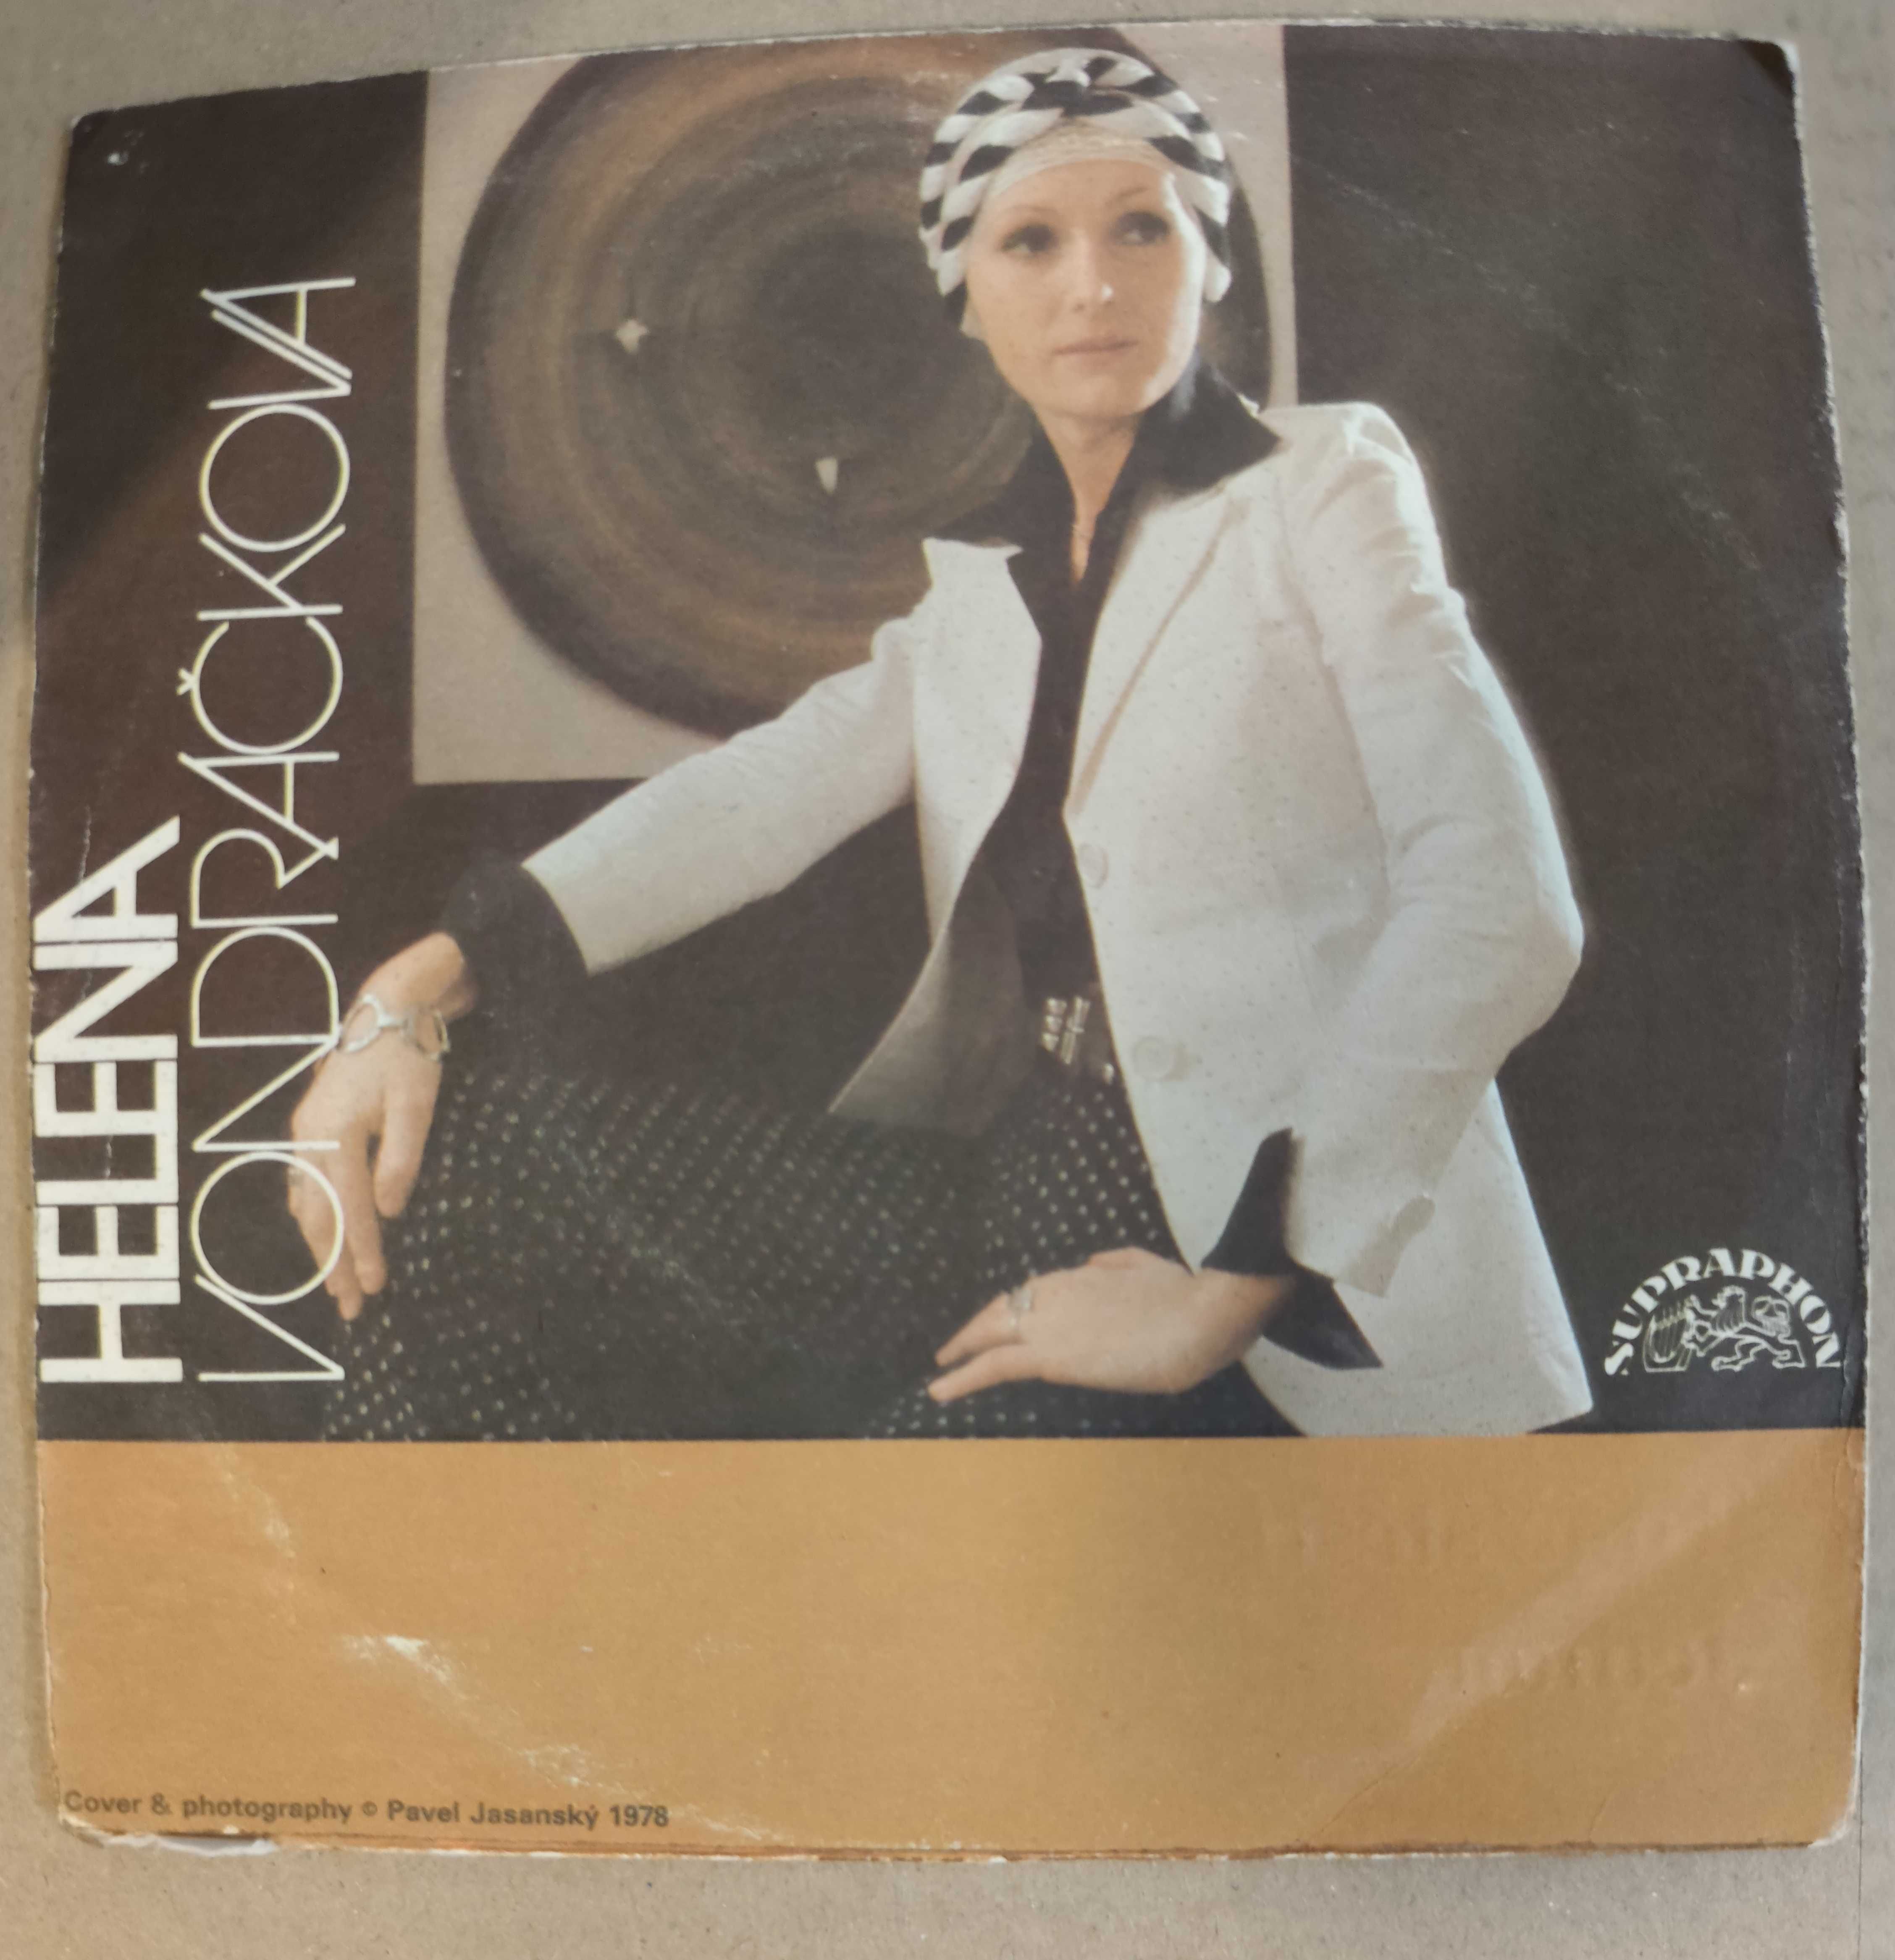 Helena Vondrackova. 7". 45rpm. VG++. Funk/Soul